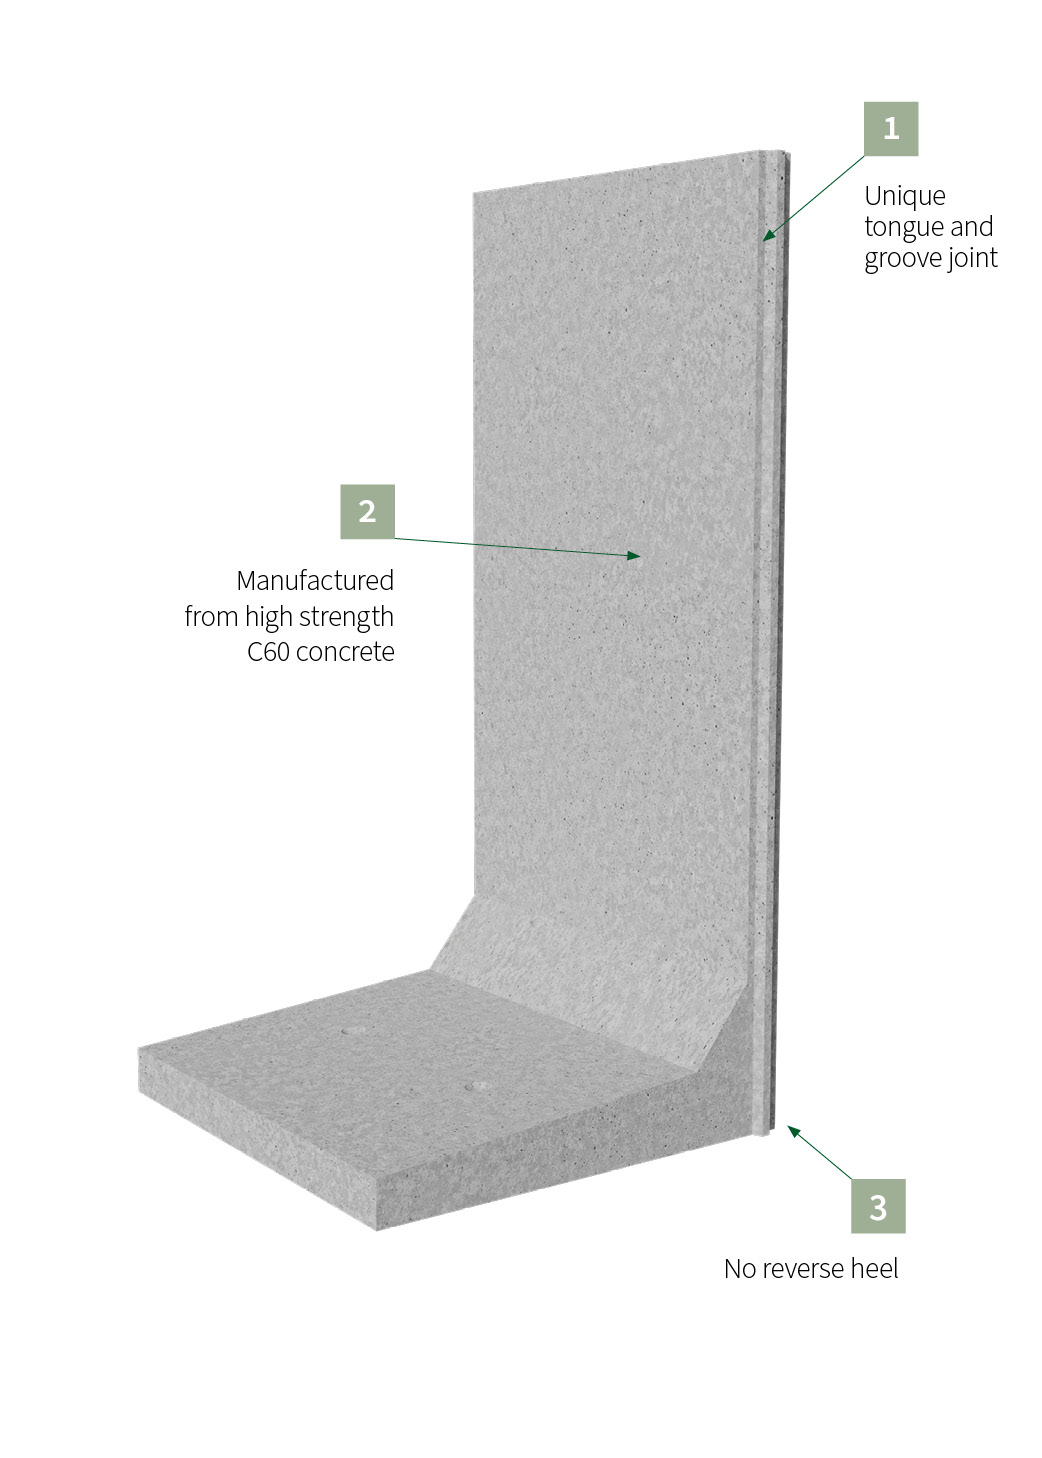 L-Bloc® pre-stressed L-shaped interlocking concrete retaining wall